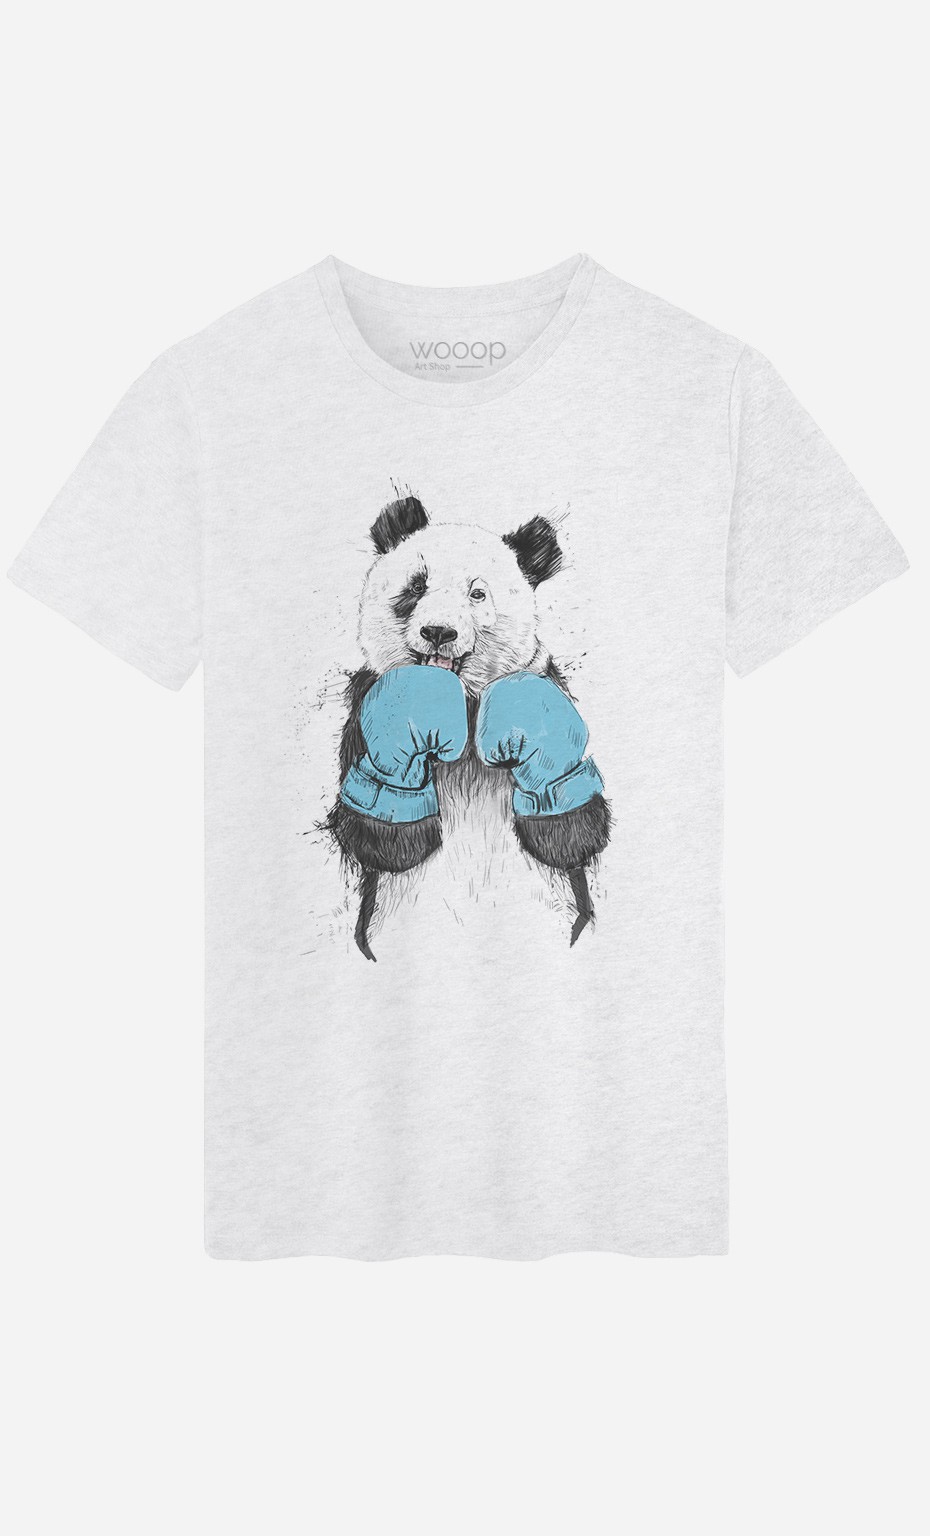 T-Shirt Homme The Winner Panda